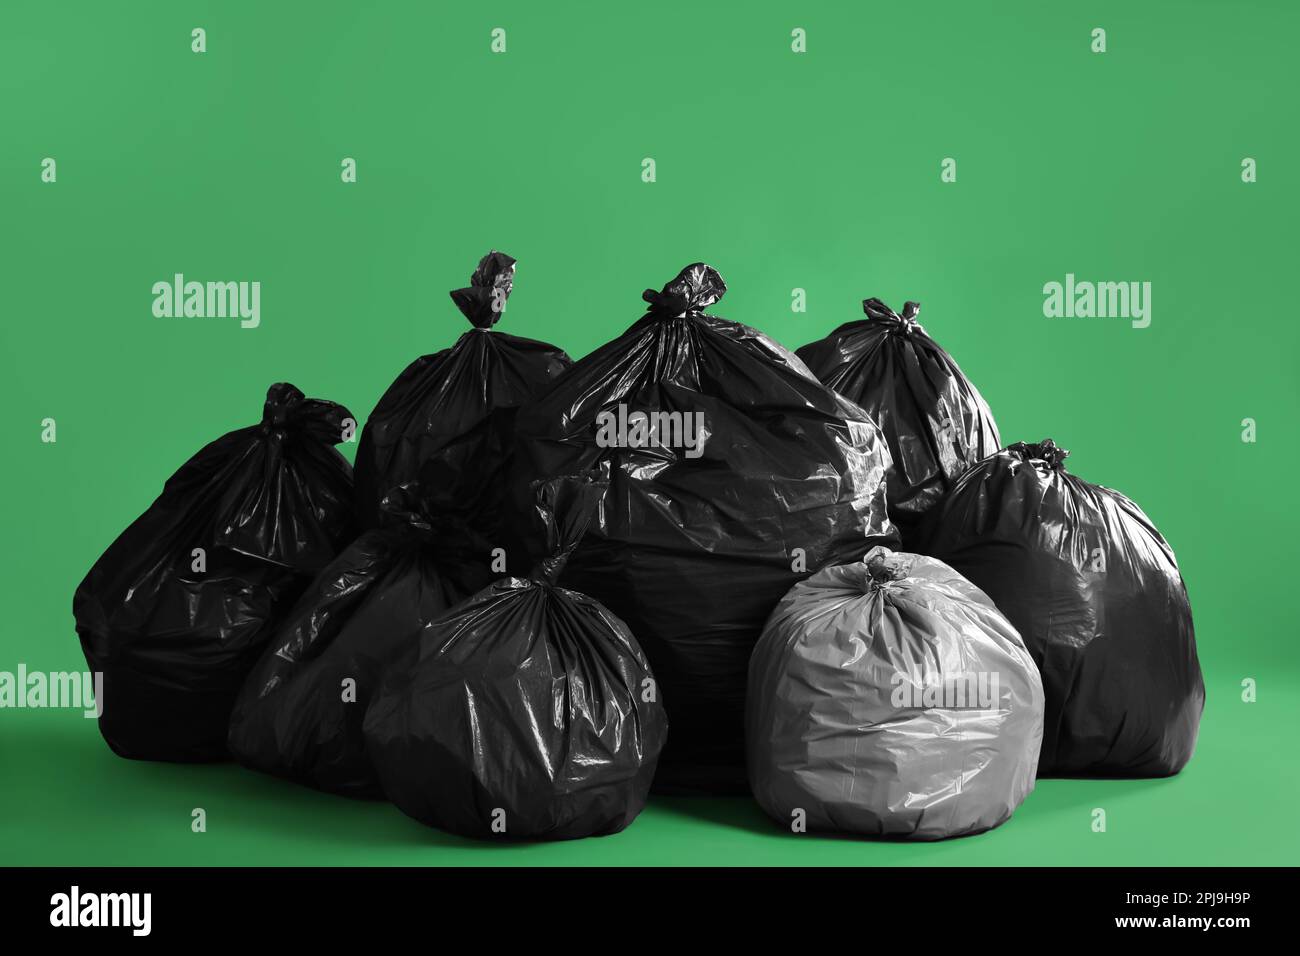 https://c8.alamy.com/comp/2PJ9H9P/trash-bags-full-of-garbage-on-green-background-2PJ9H9P.jpg